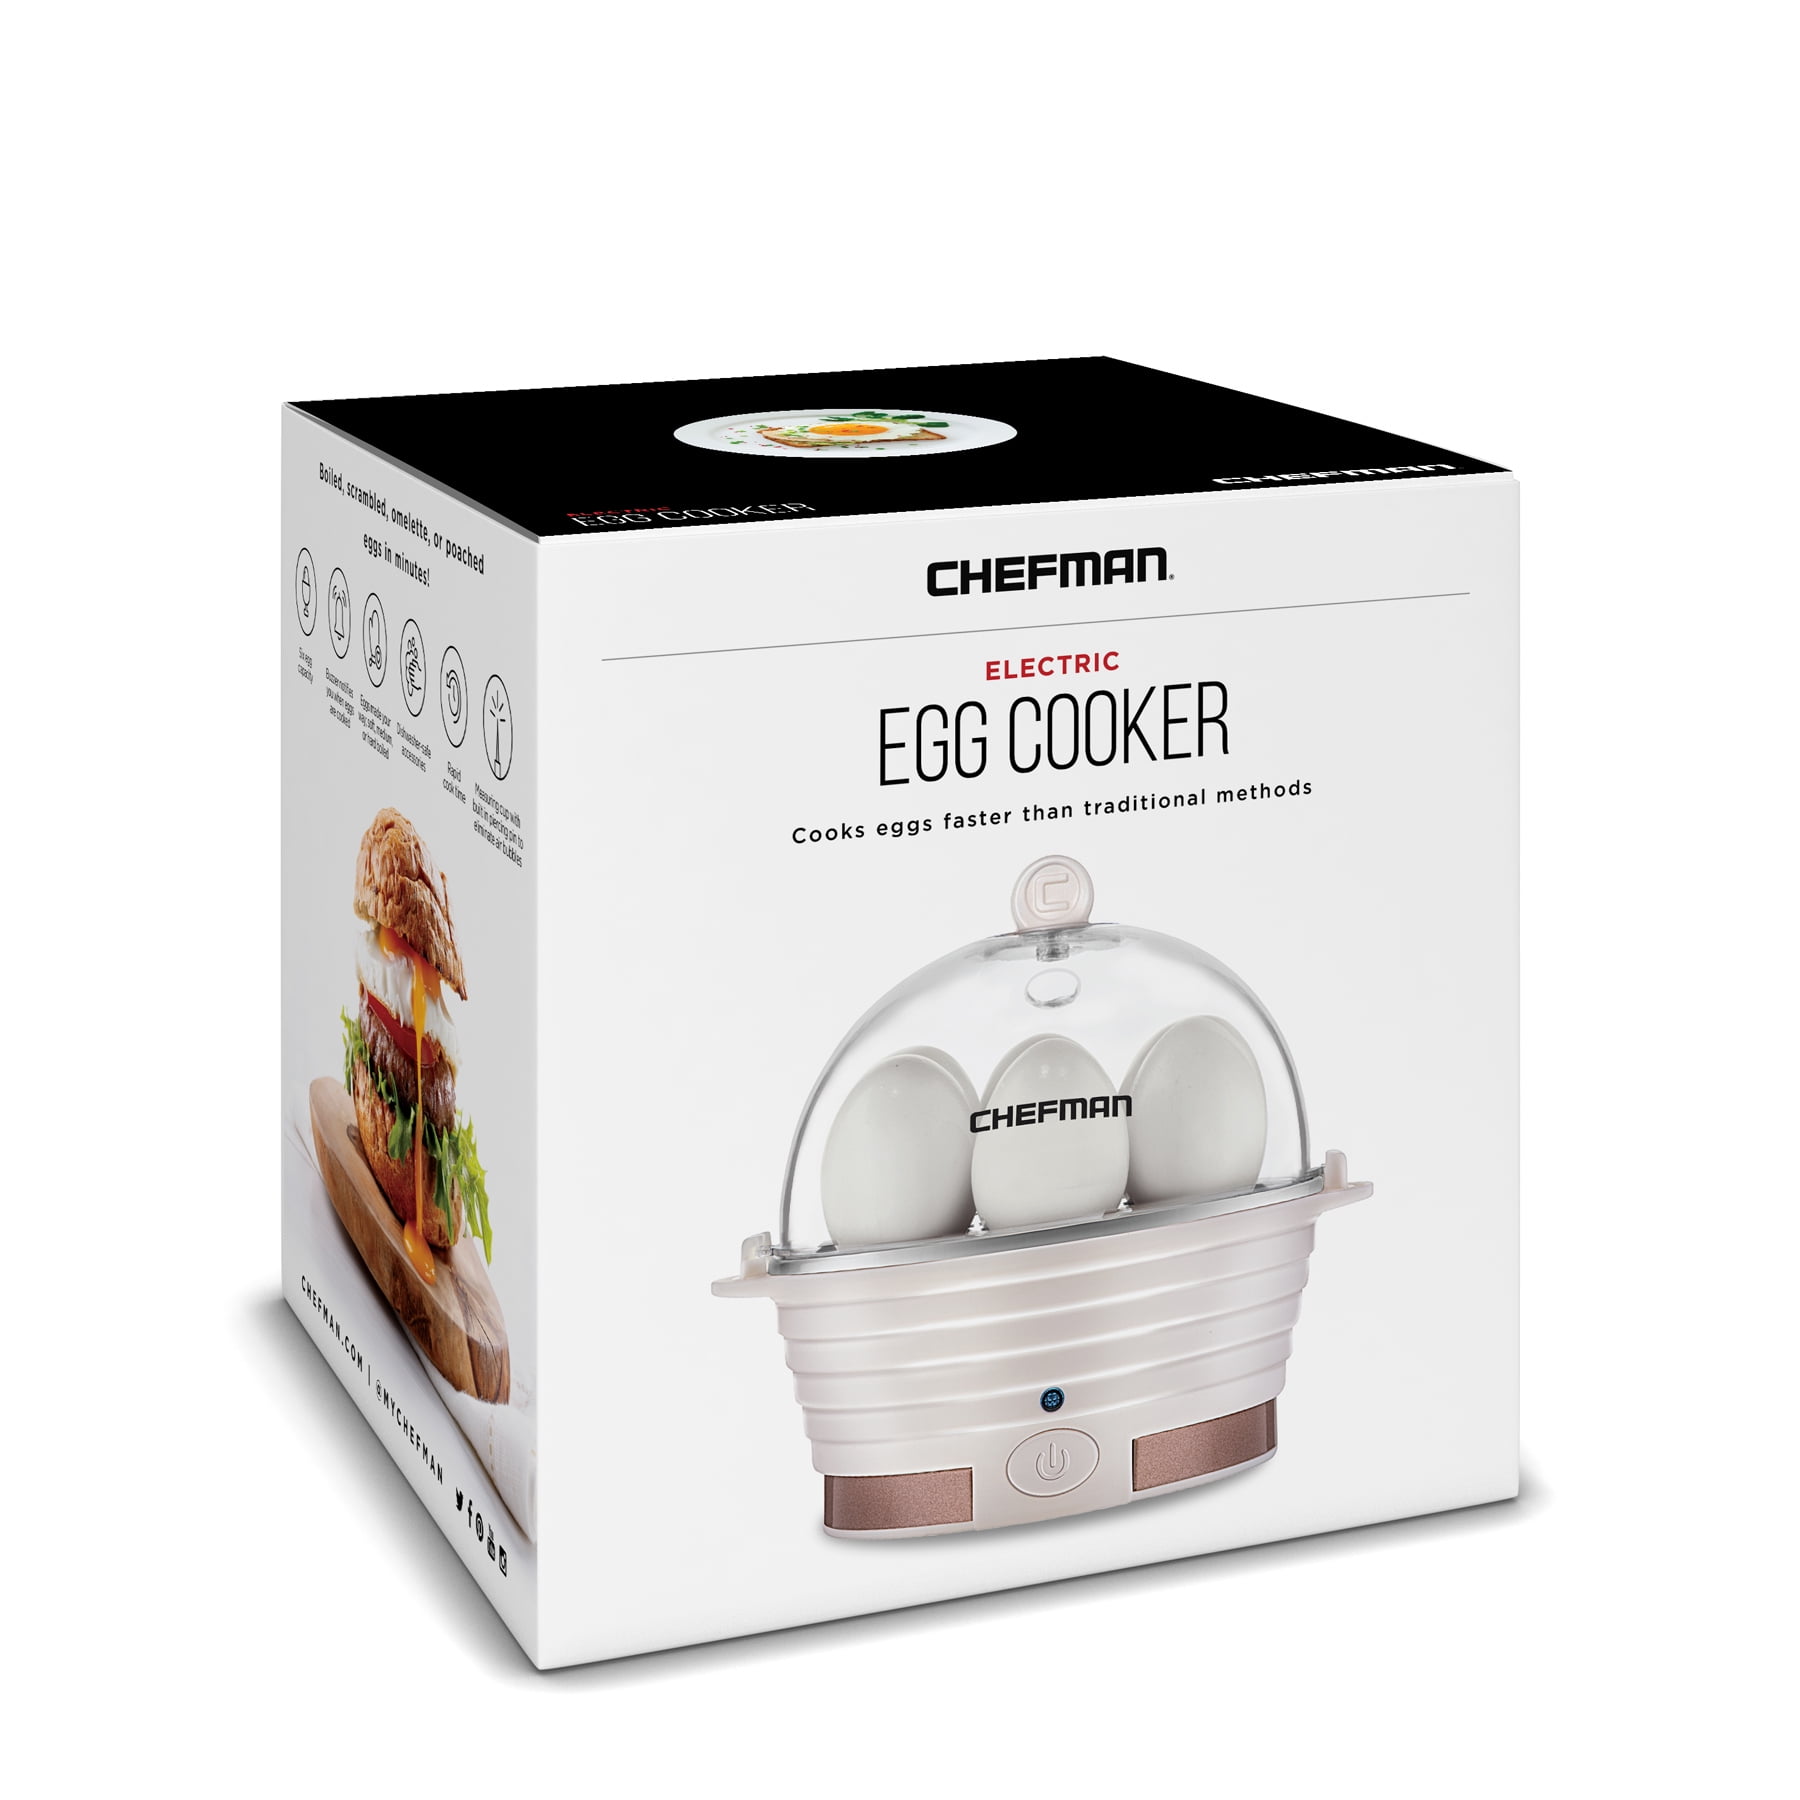 Chefman Egg-Maker Rapid Poacher, Food & Vegetable Steamer $8.00